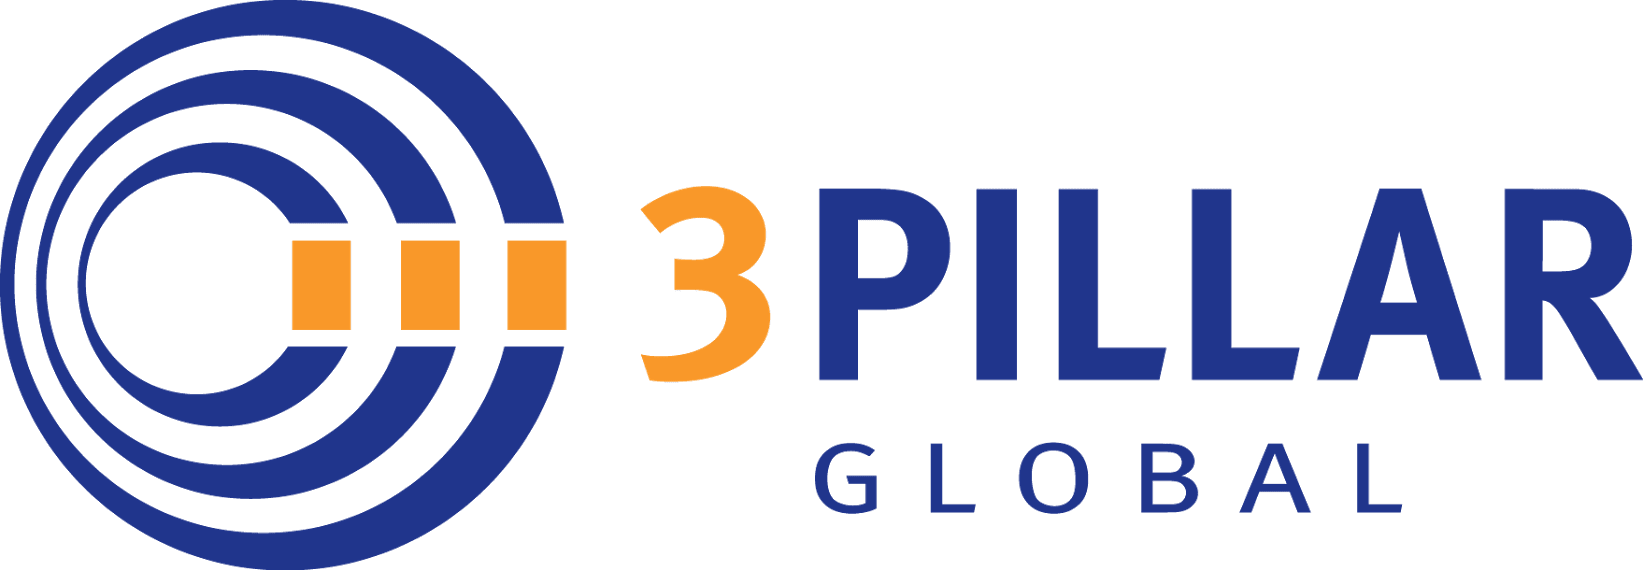 3 Pillar Global logo